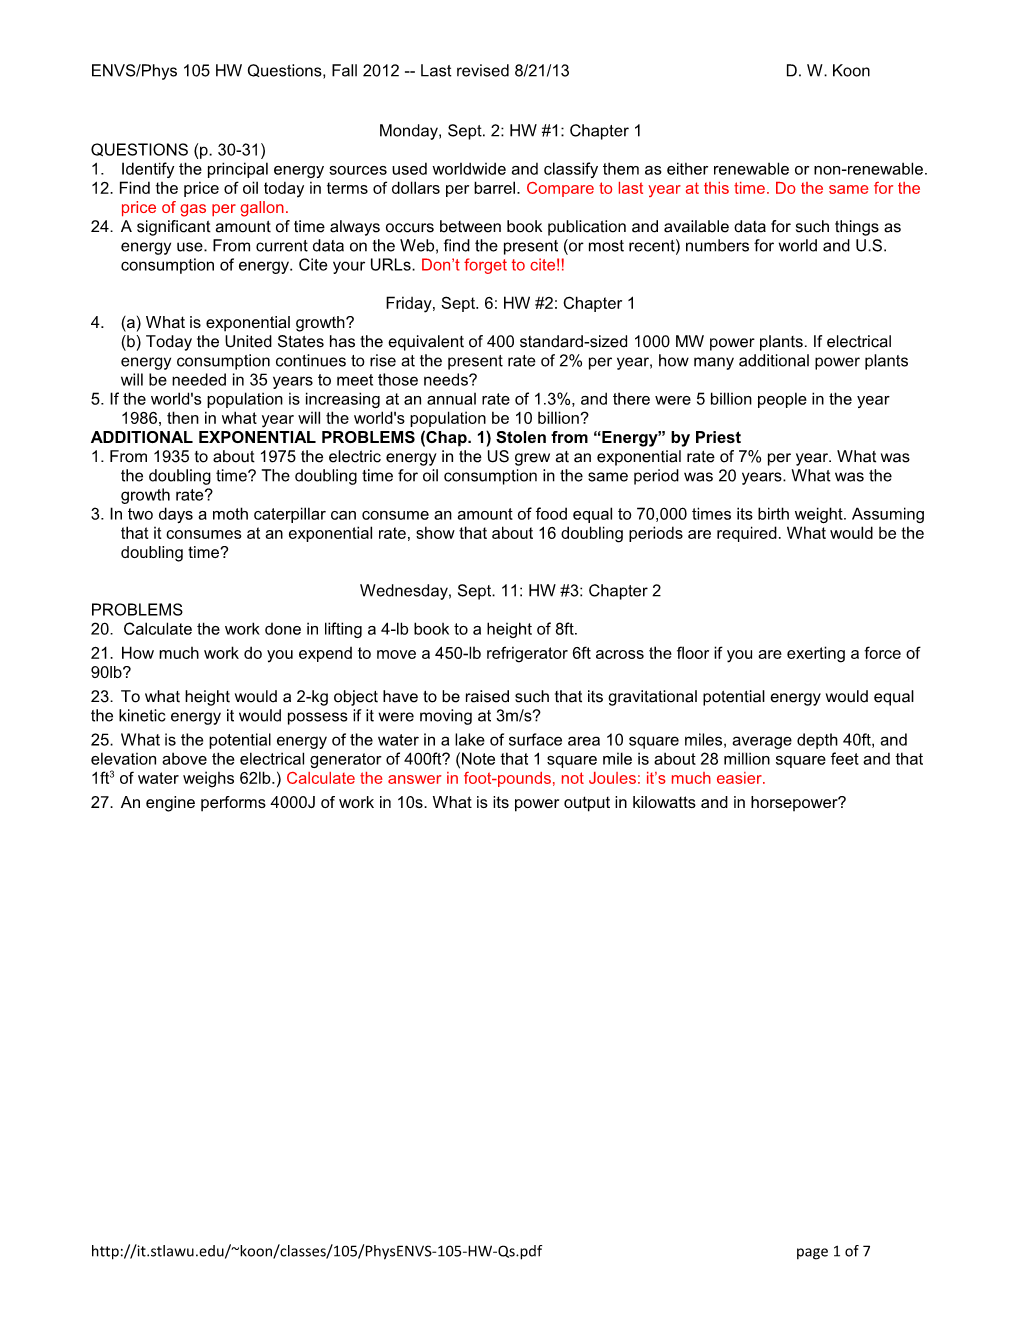 ENVS/Phys 105 HW Questions, Fall 2012 Last Revised 8/21/13D. W.Koon